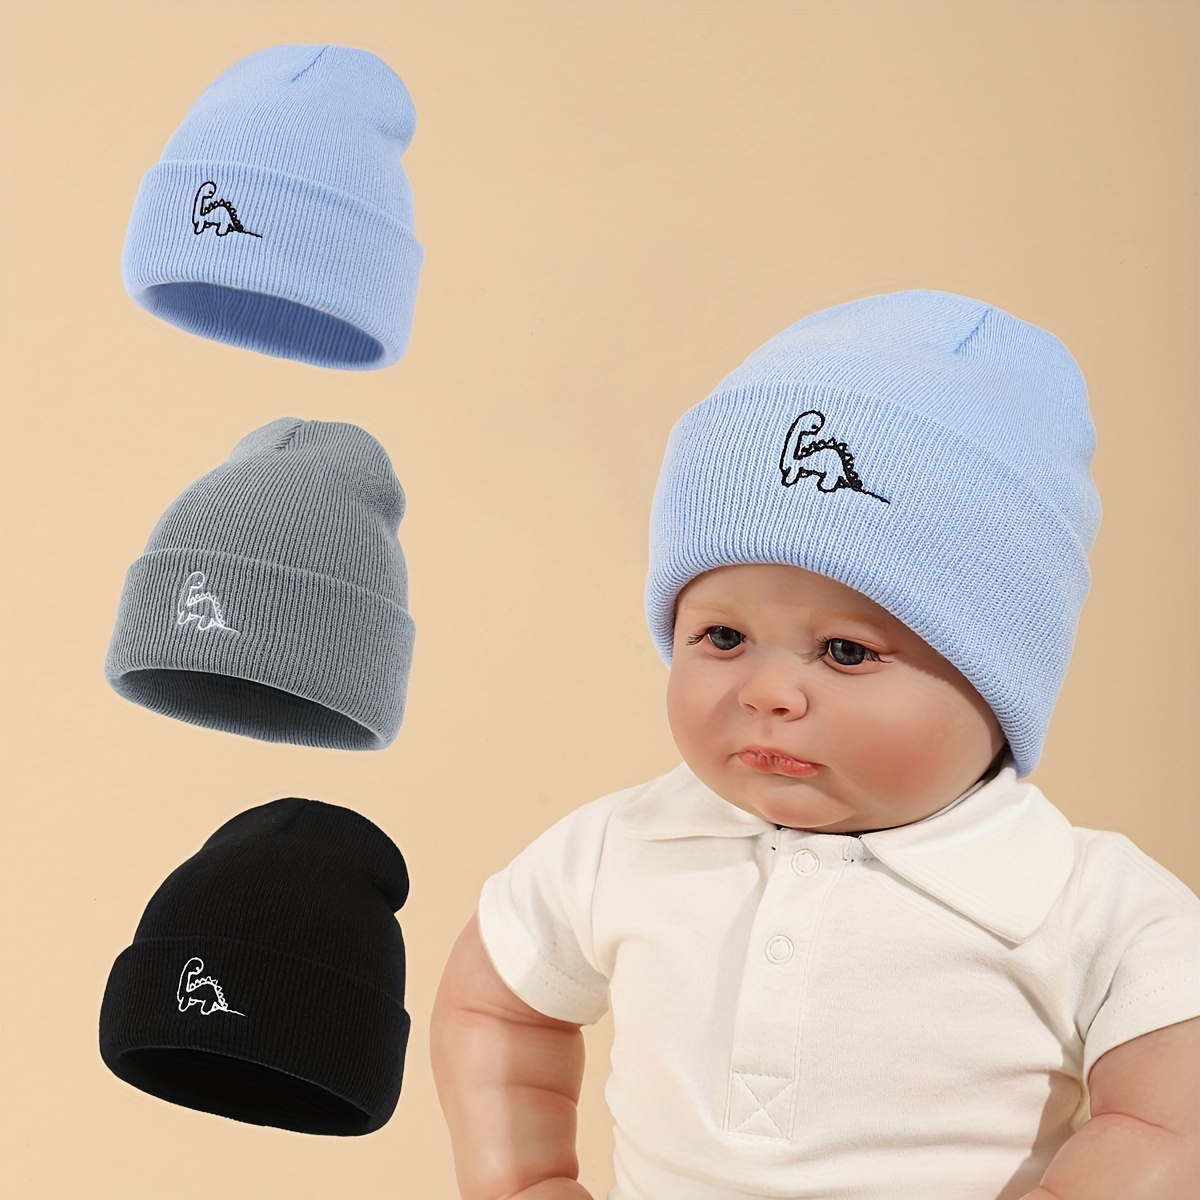 

3pcs/set Baby Dinosaur Beanie, Toddler Warm Knit Winter Hats